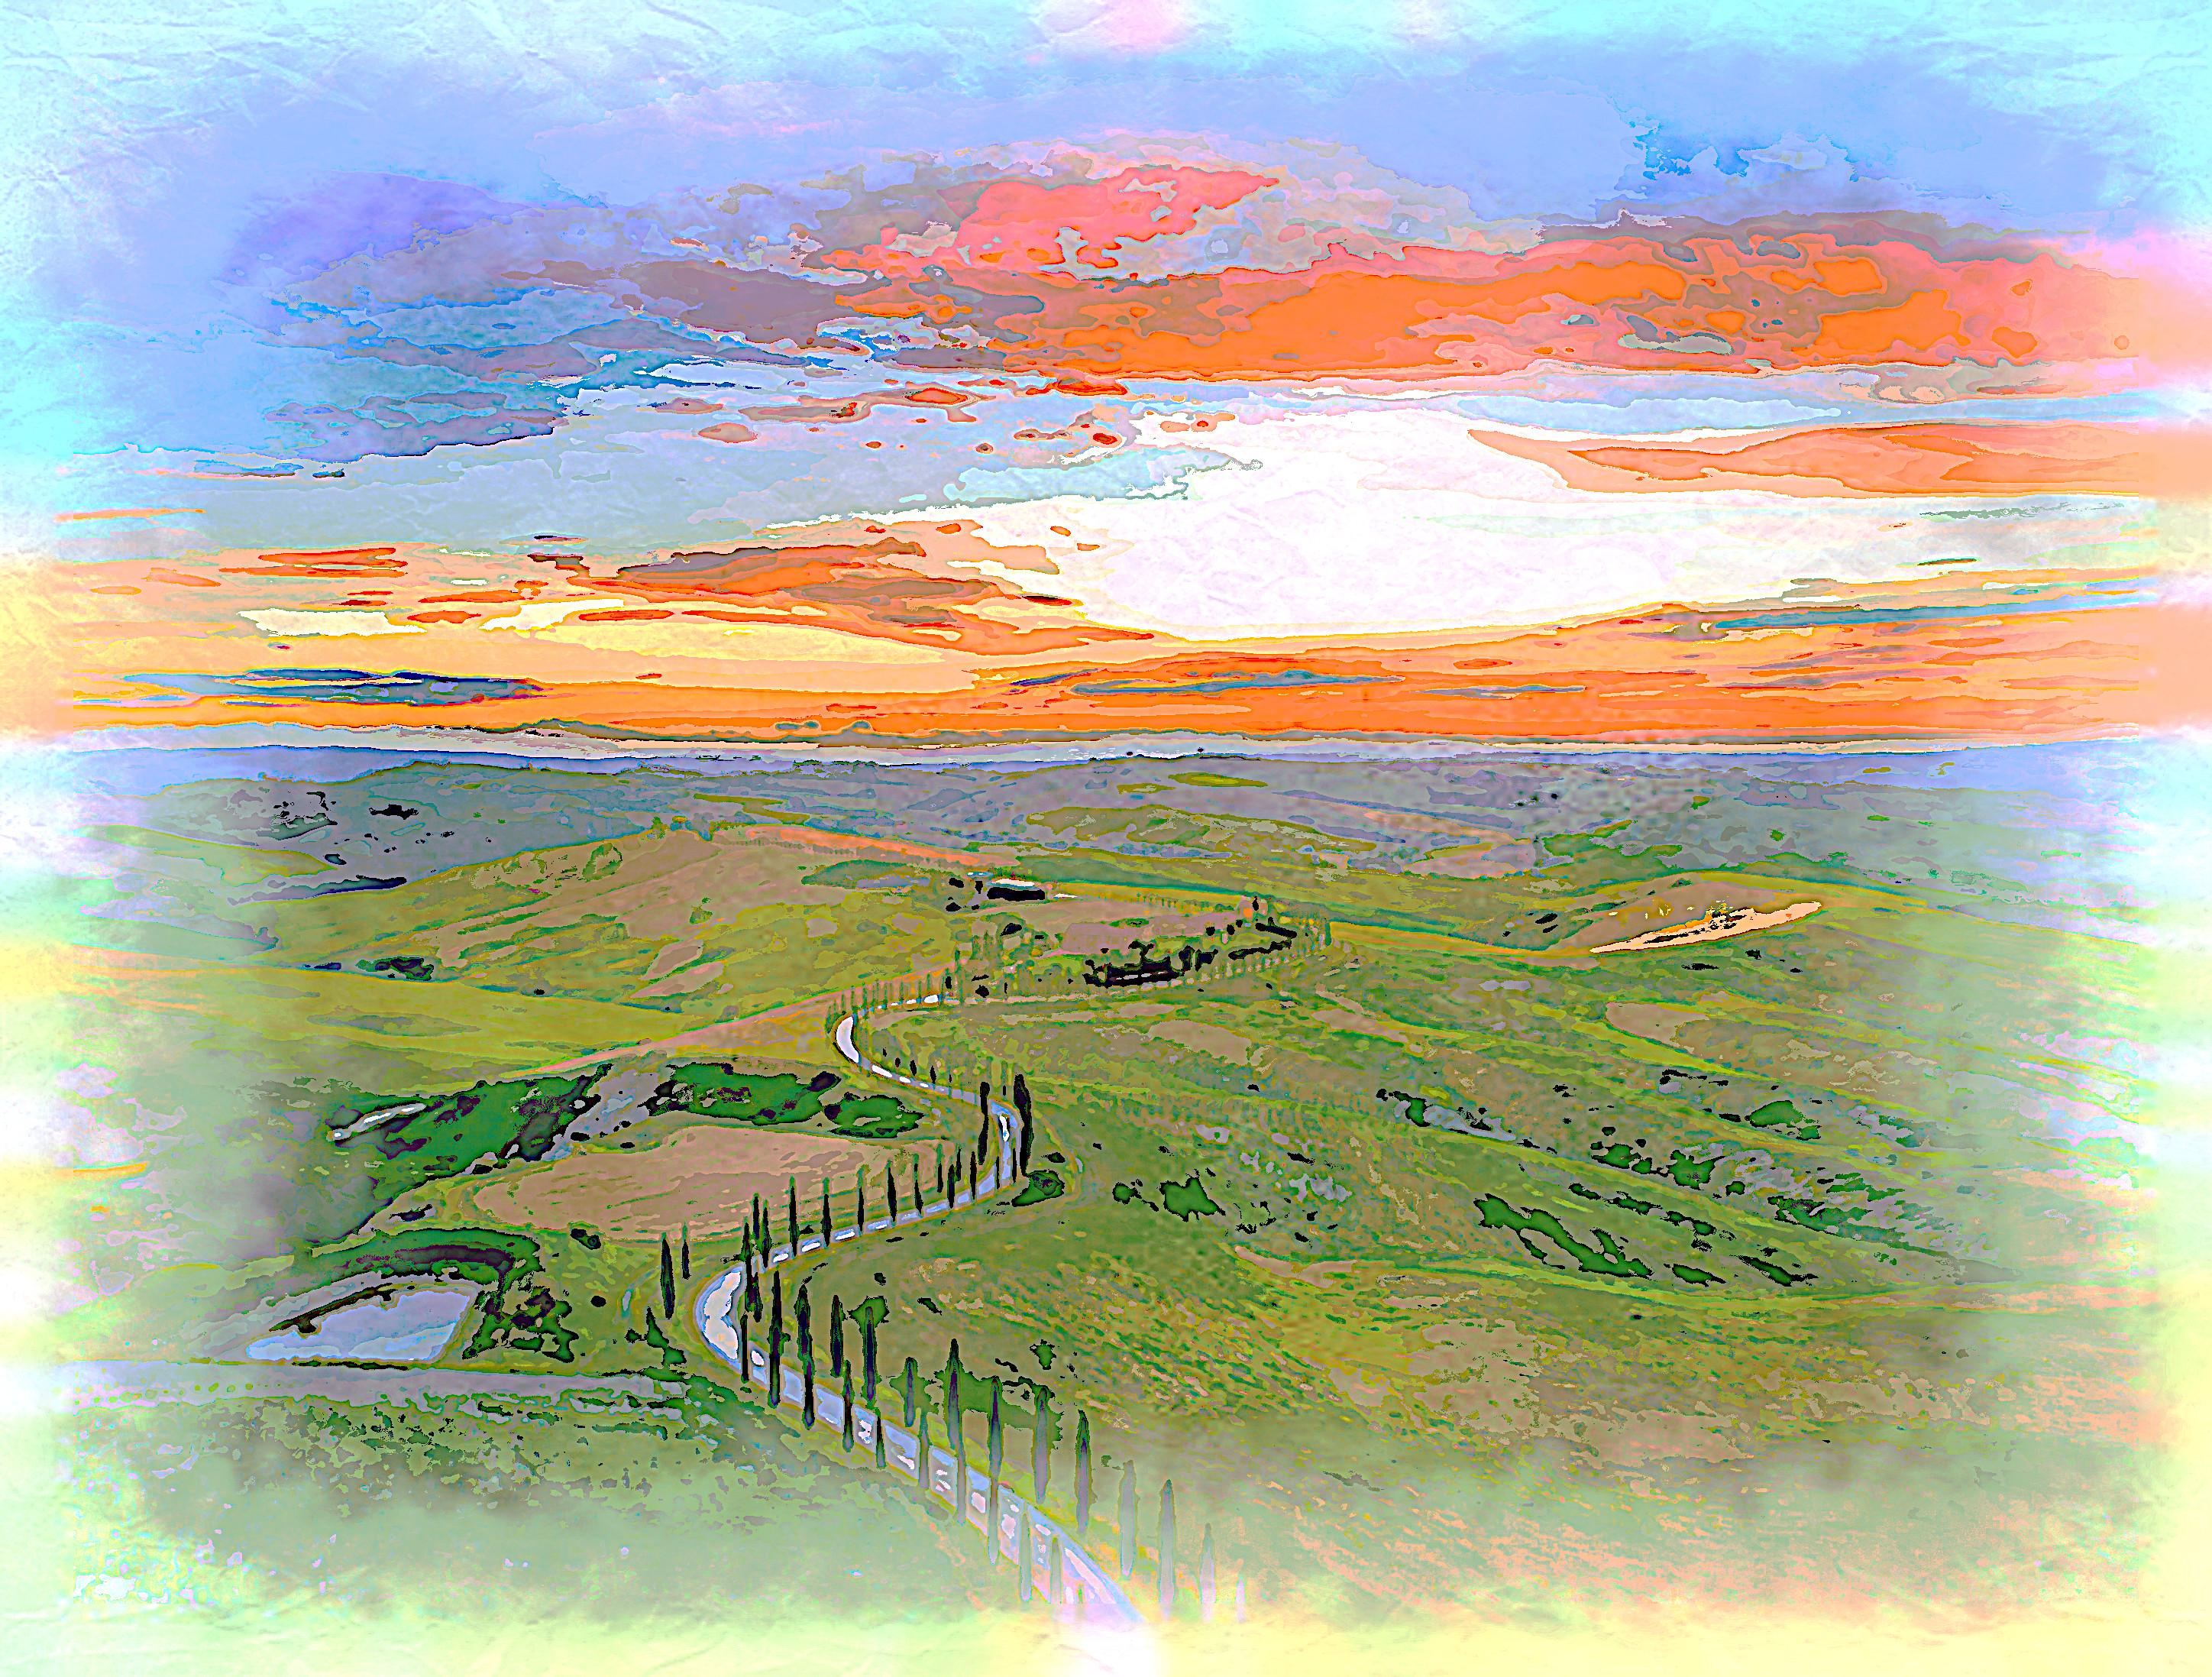 2020-04-05 17-23-03 luca-micheli-r9RW20TrQ0Y-unsplash as a digital aquarel, using18 colours, source landscape, look contrast plus.jpg